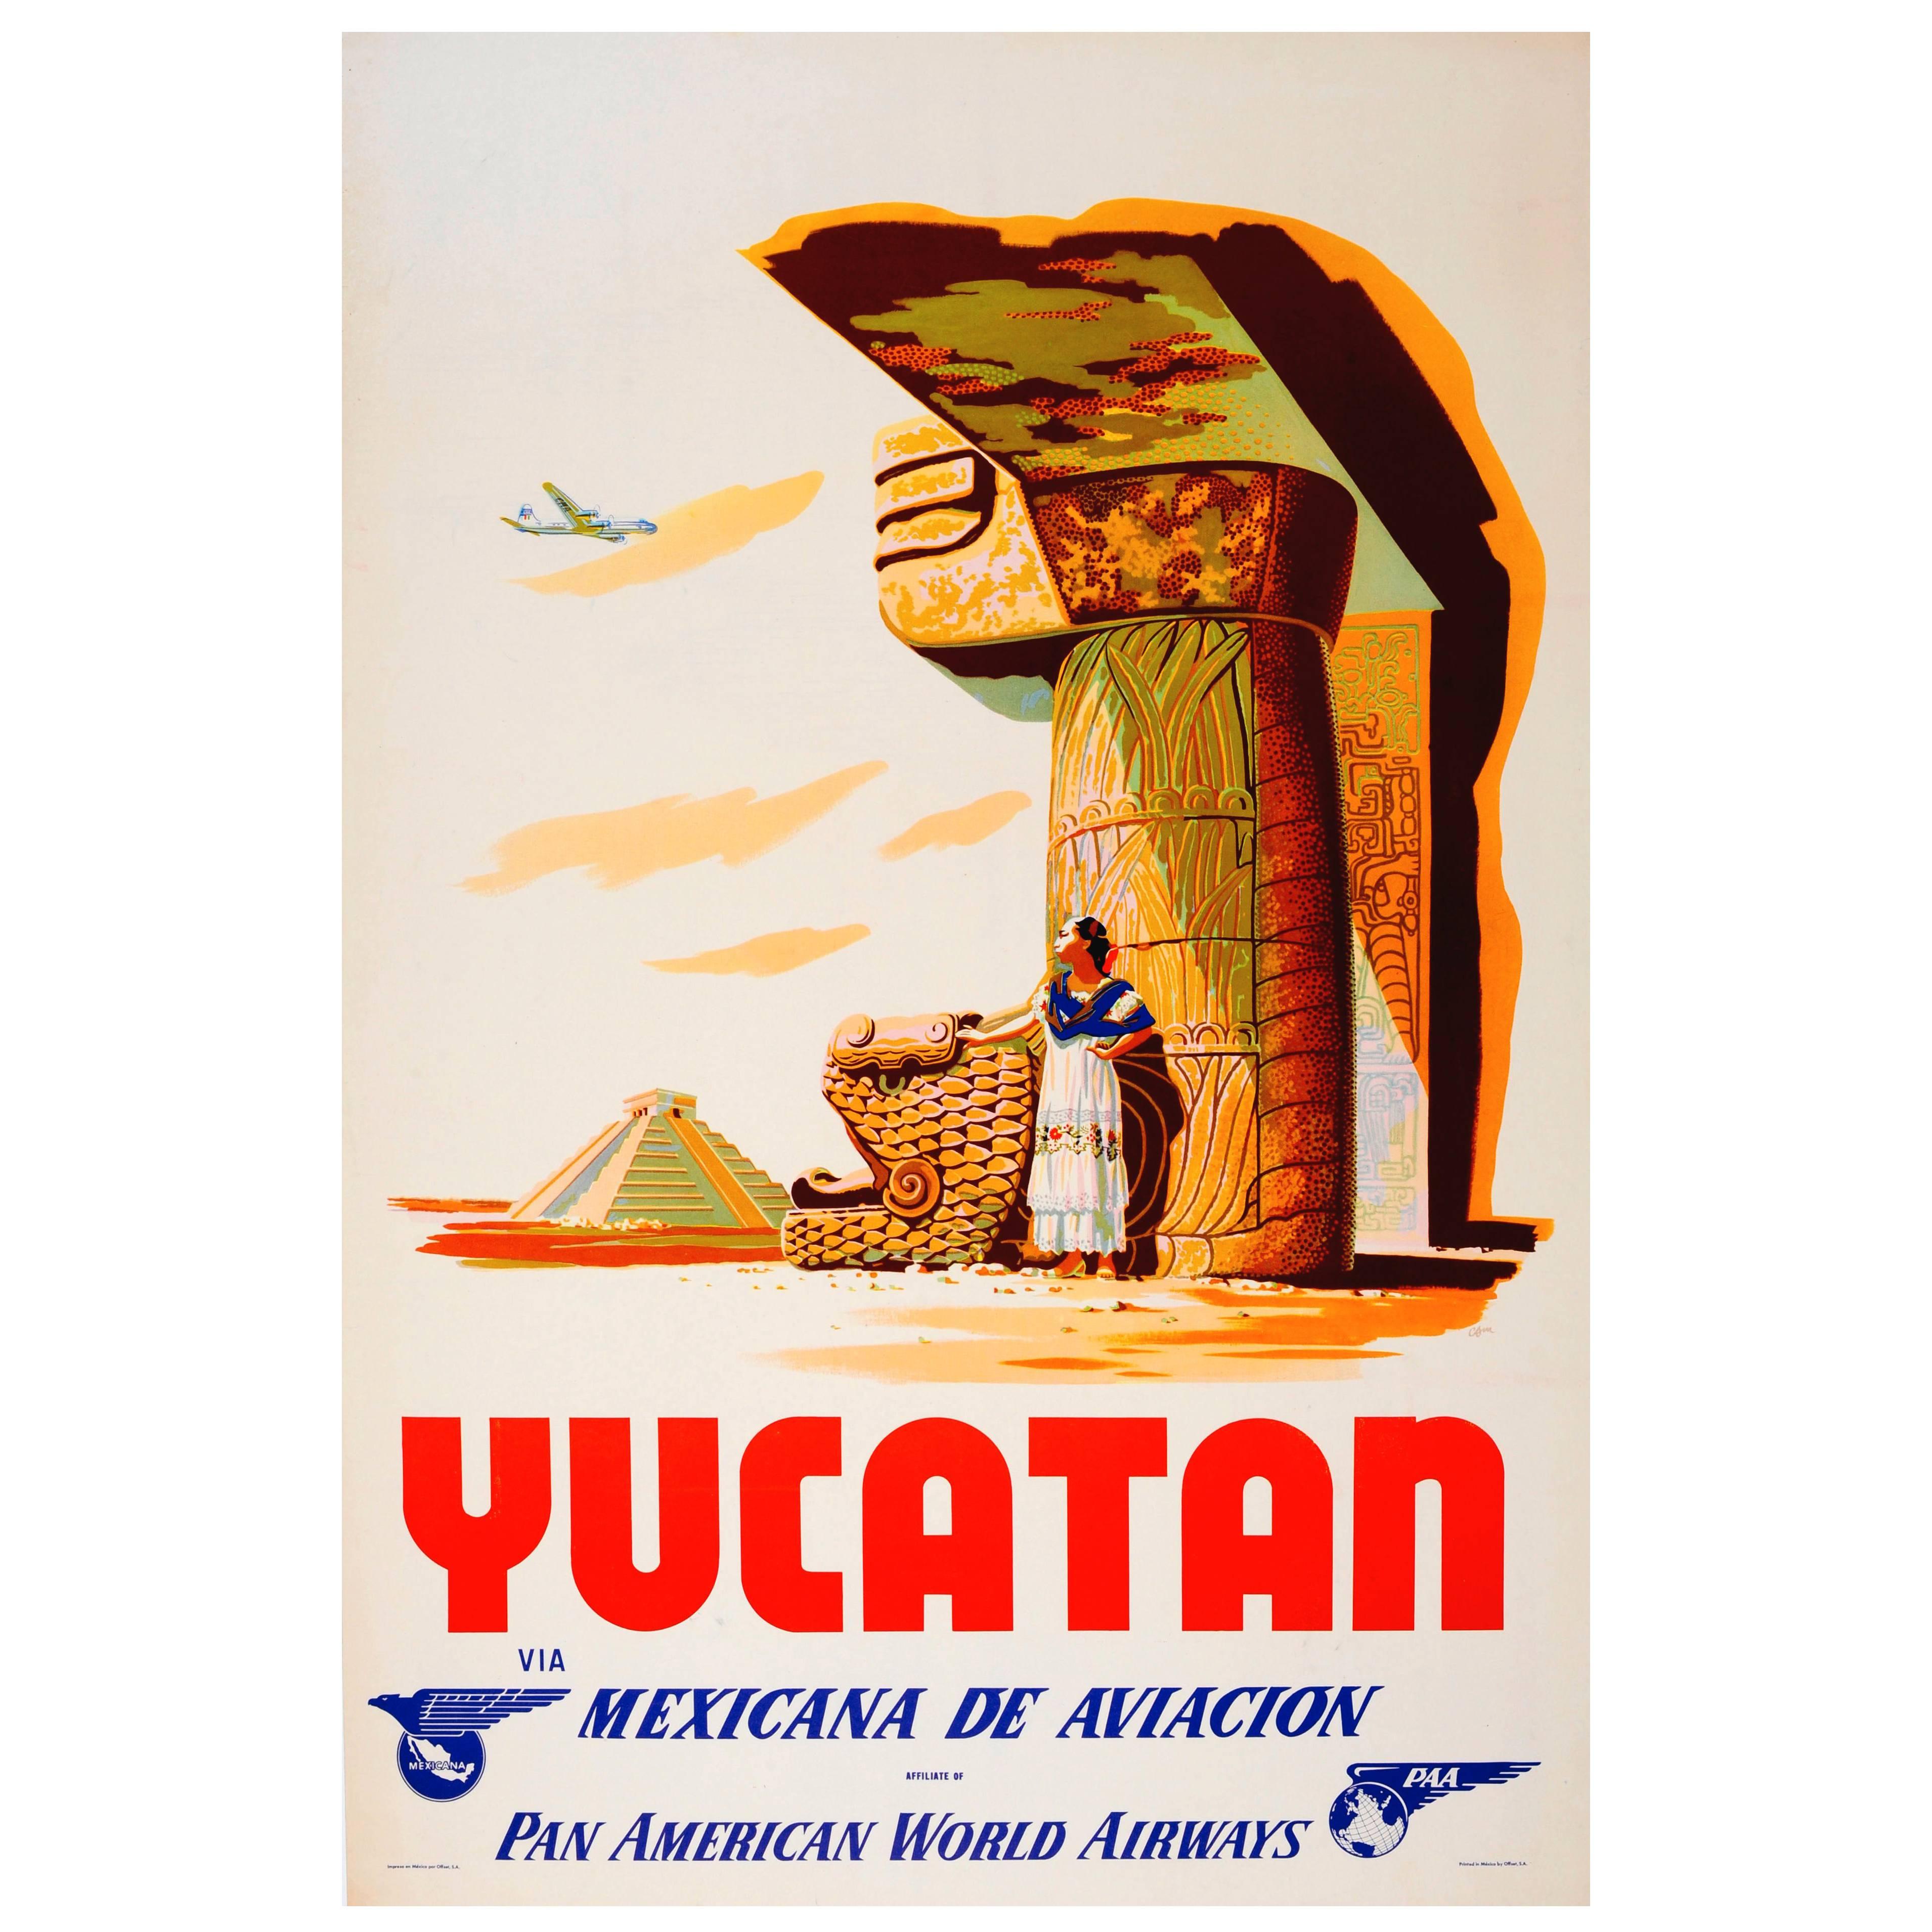 Original Vintage Travel Poster for Yucatan Via Mexicana De Aviacion, Pan Am